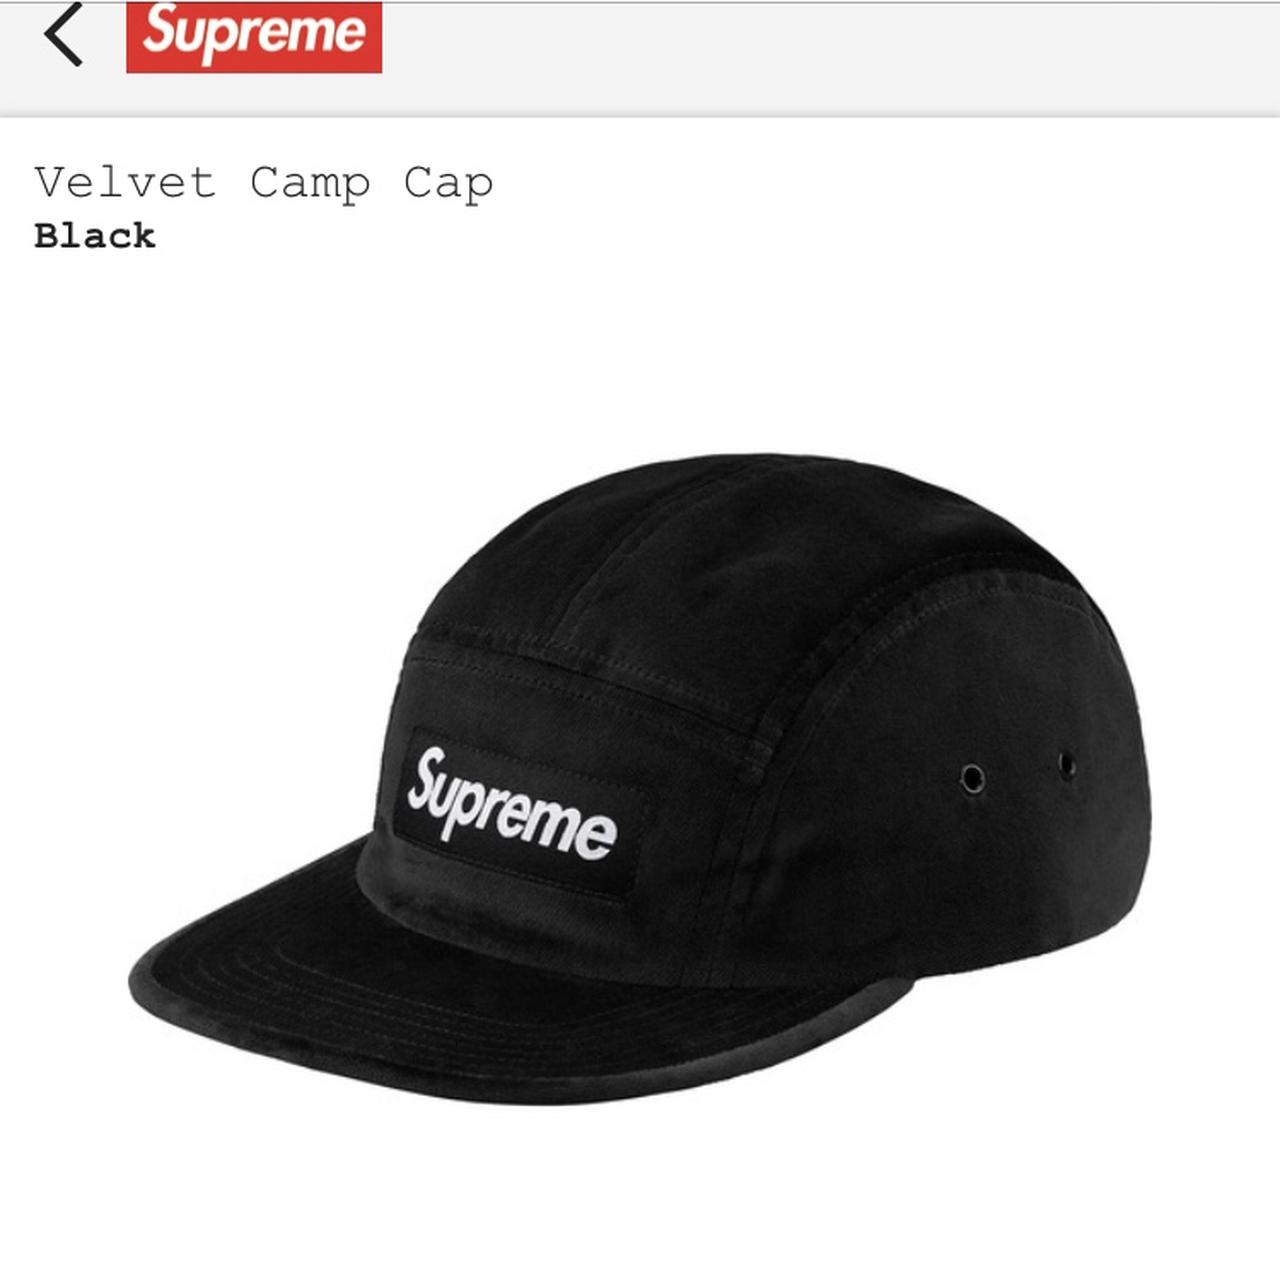 Supreme Velvet Camp Cap Box Logo- Black From the... - Depop